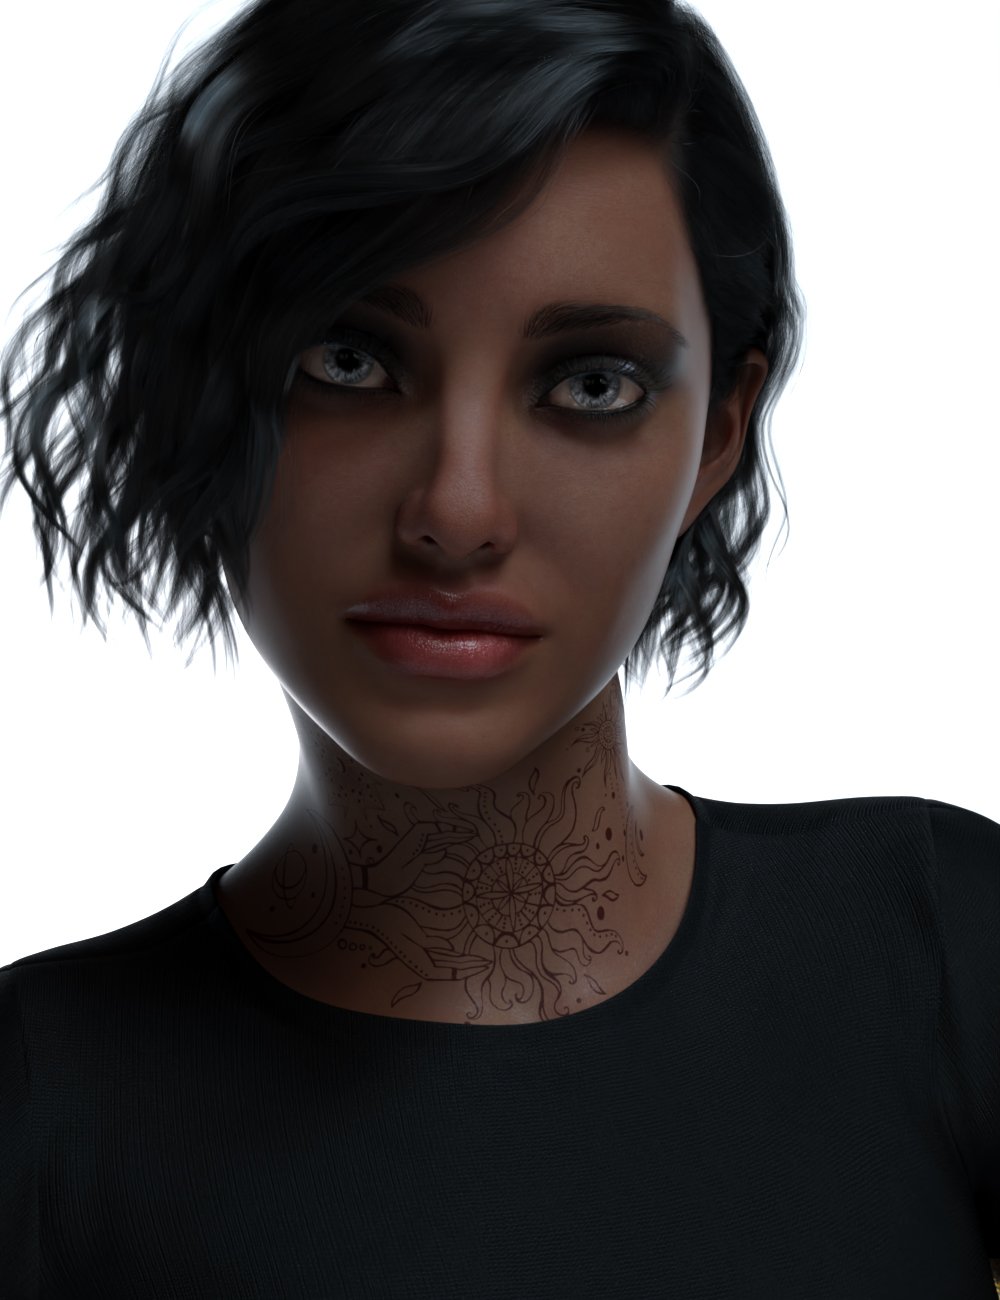 Evora for Genesis 8.1 Female by: Moonscape Graphicshotlilme74, 3D Models by Daz 3D